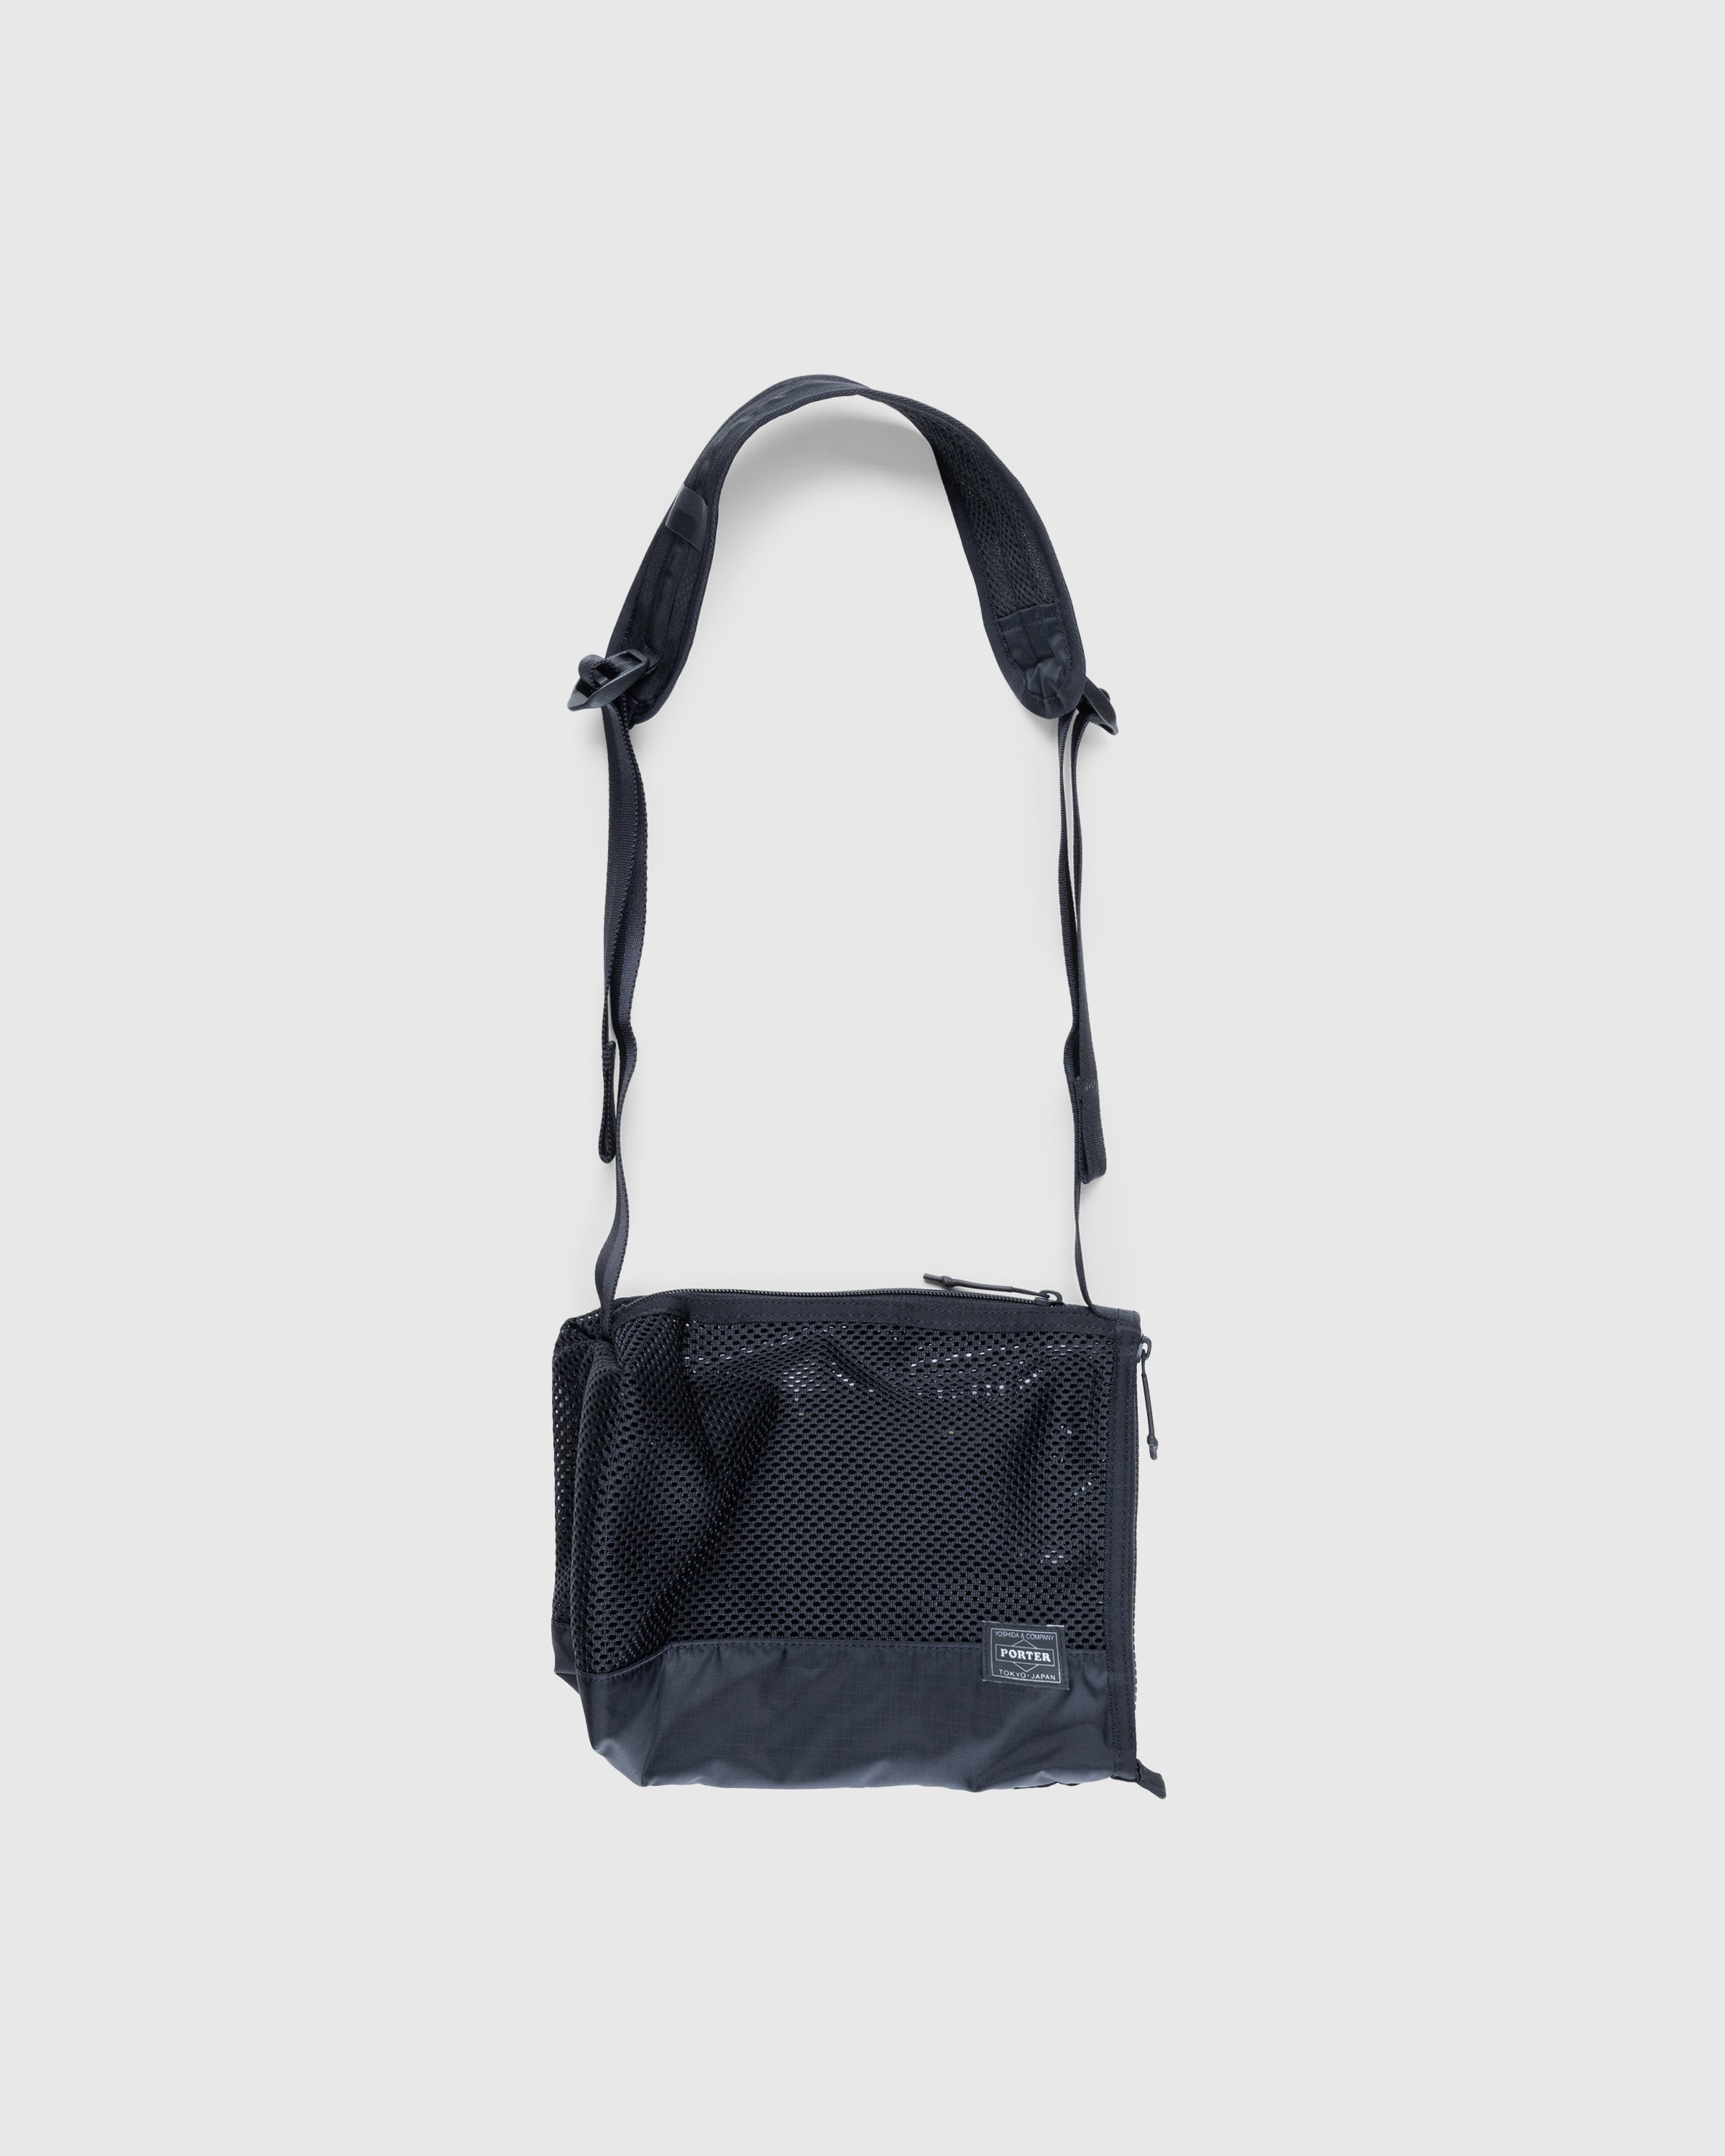 Porter-Yoshida & Co. - Screen Front Side Bag Black - Accessories - Black - Image 1